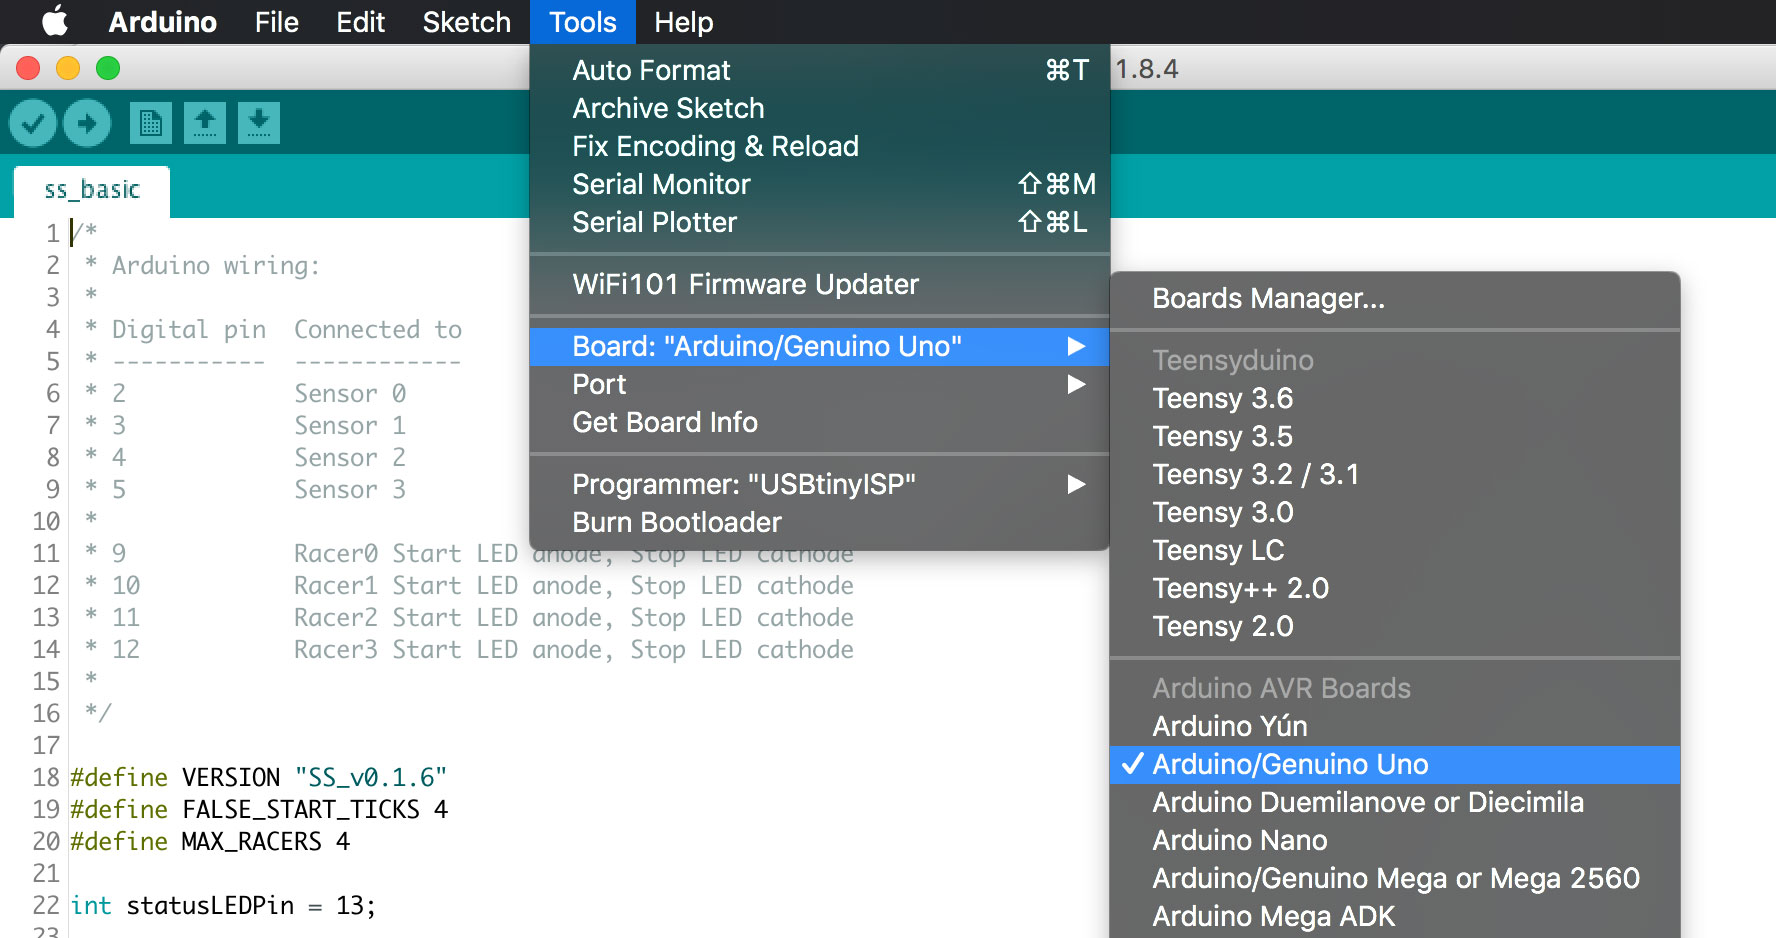 Select Arduino Uno in the tools menu.